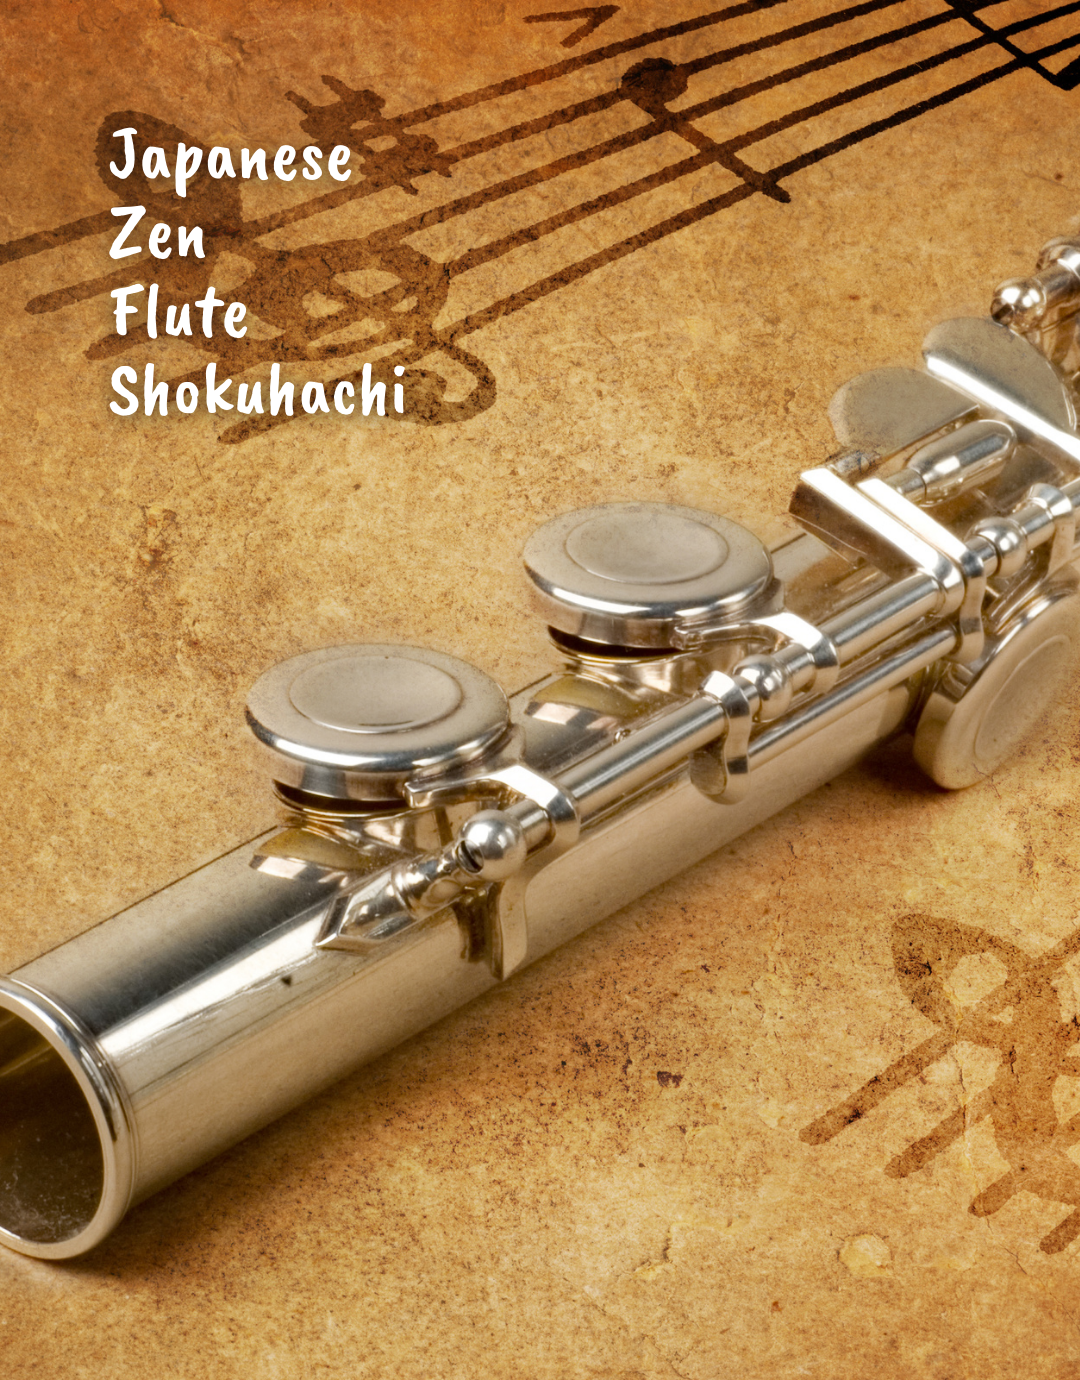 Japanese Zen Flute Shakuhachi – History and Information post thumbnail image